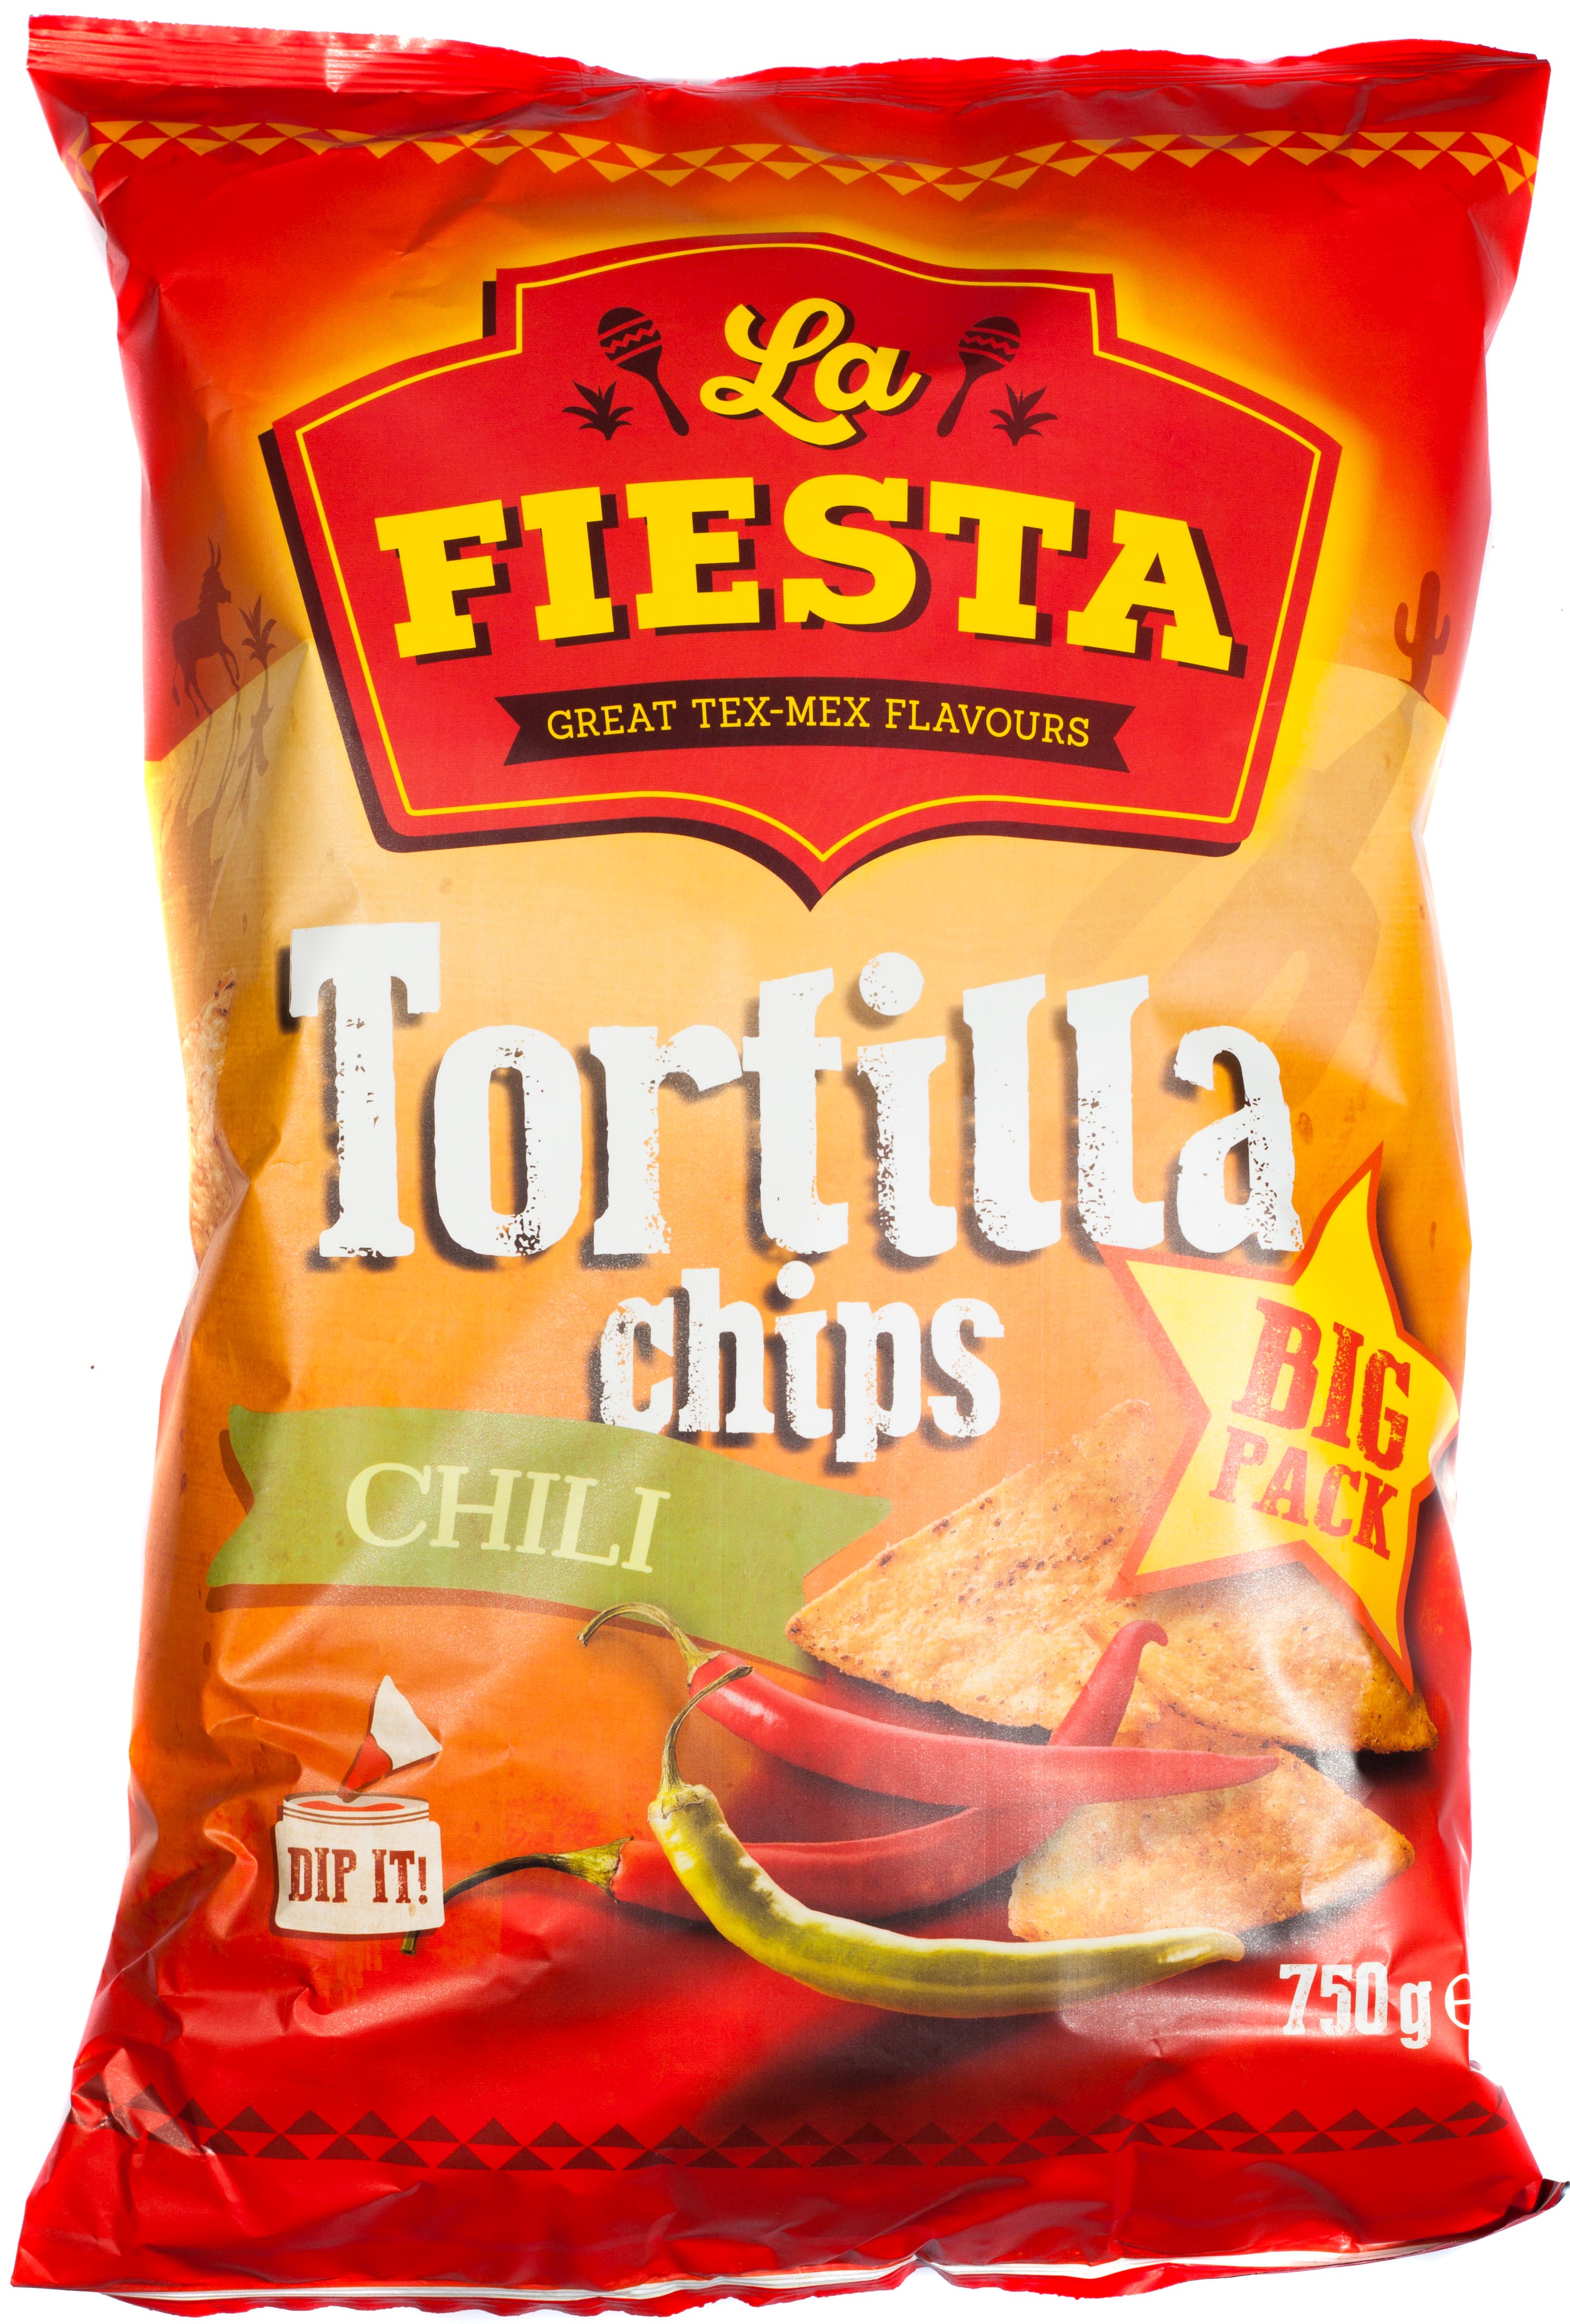 La Fiesta Tortilla Chips Chili, 750g